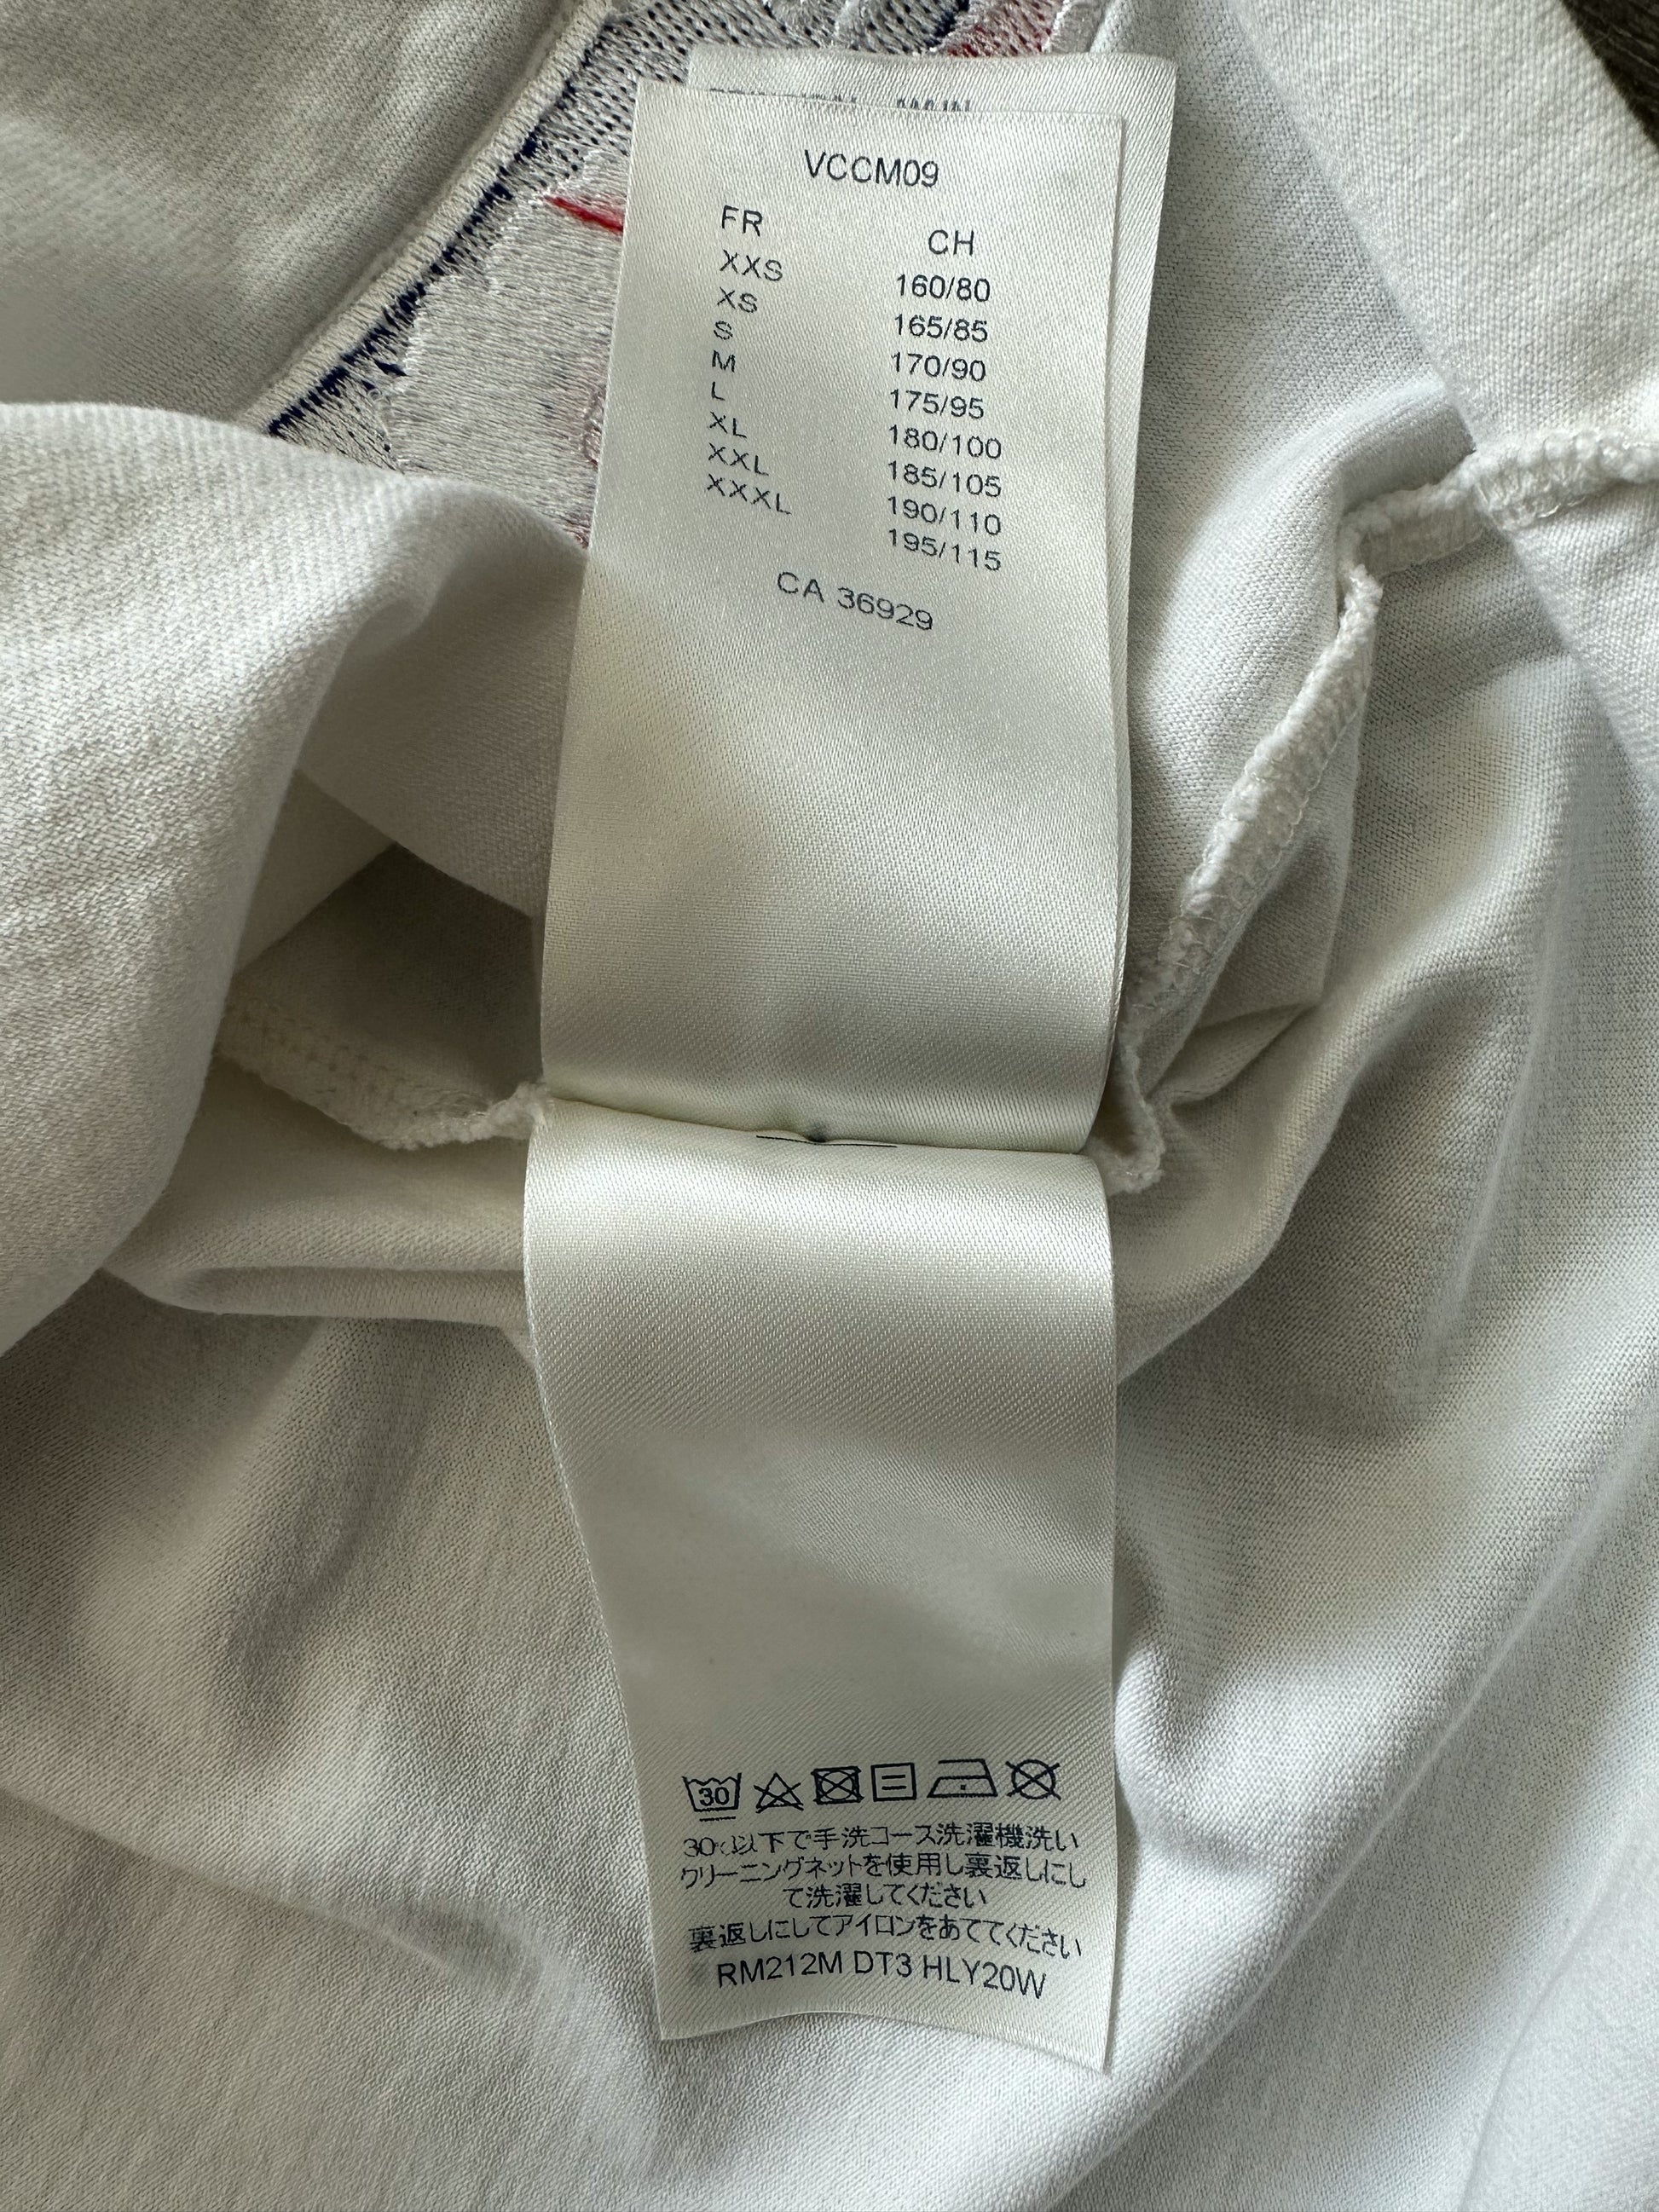 Louis Vuitton NBA Basketball Embroidered White T-shirt – Boutique